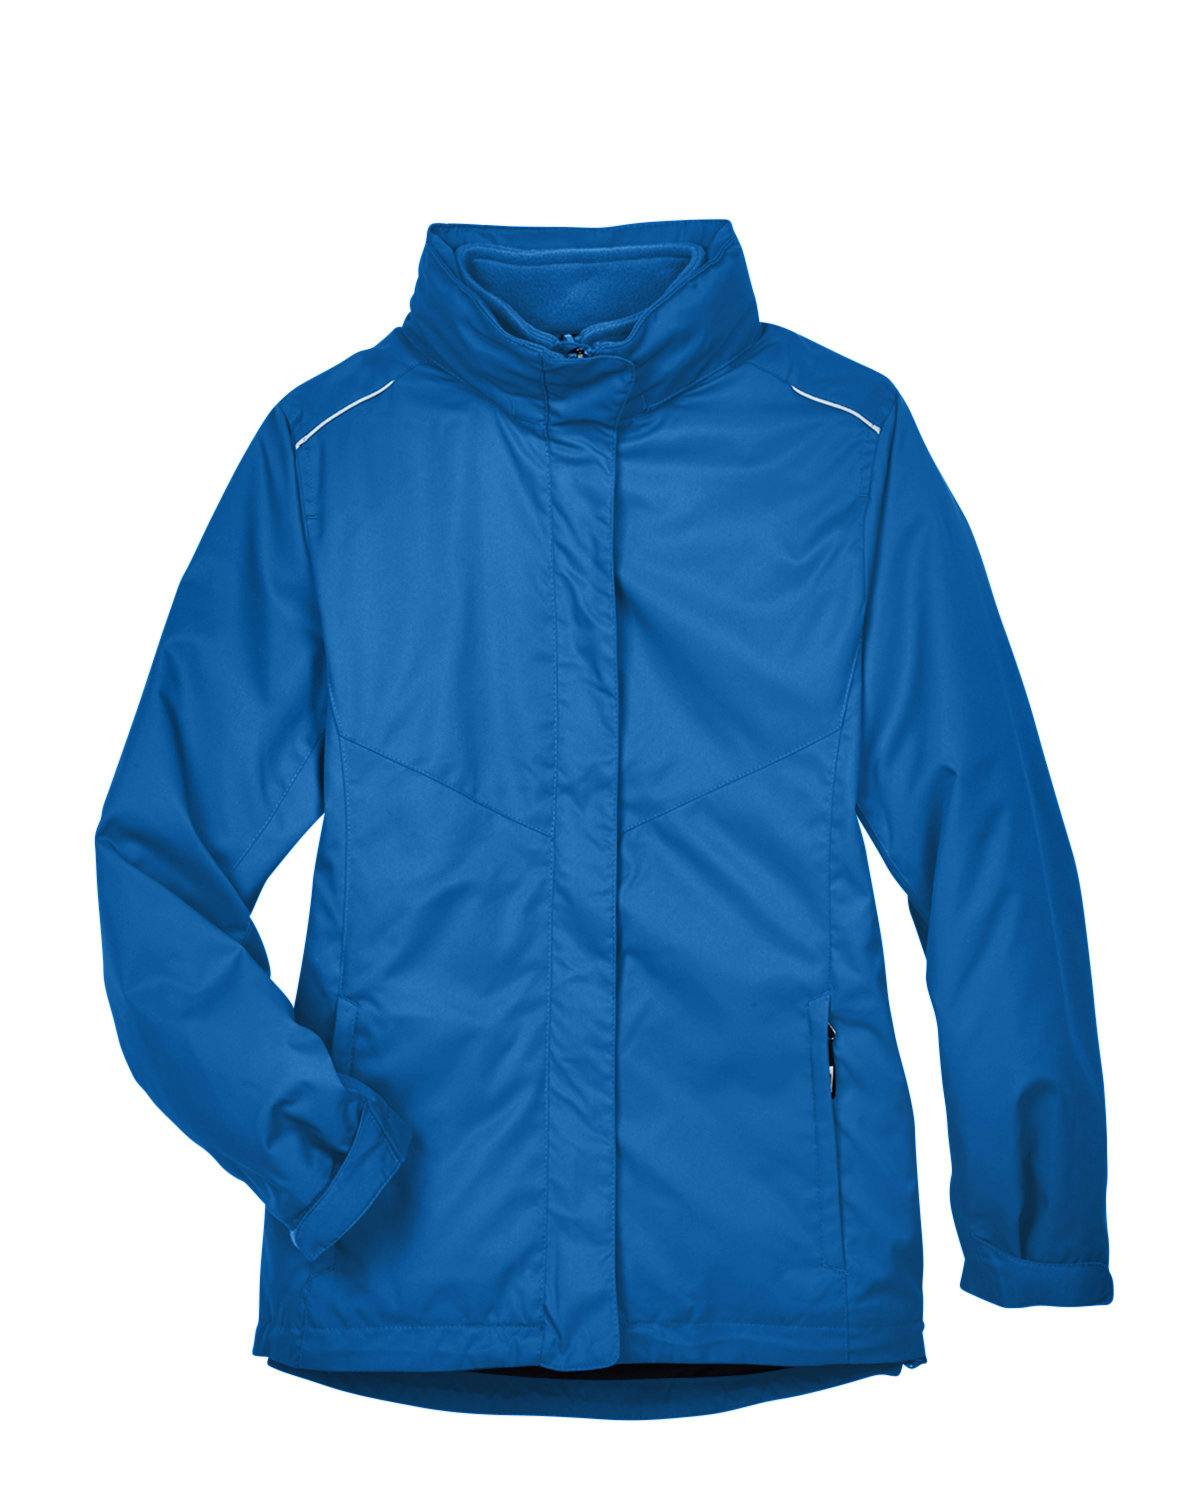 Image for Ladies' Region 3-in-1 Jacket with Fleece Liner